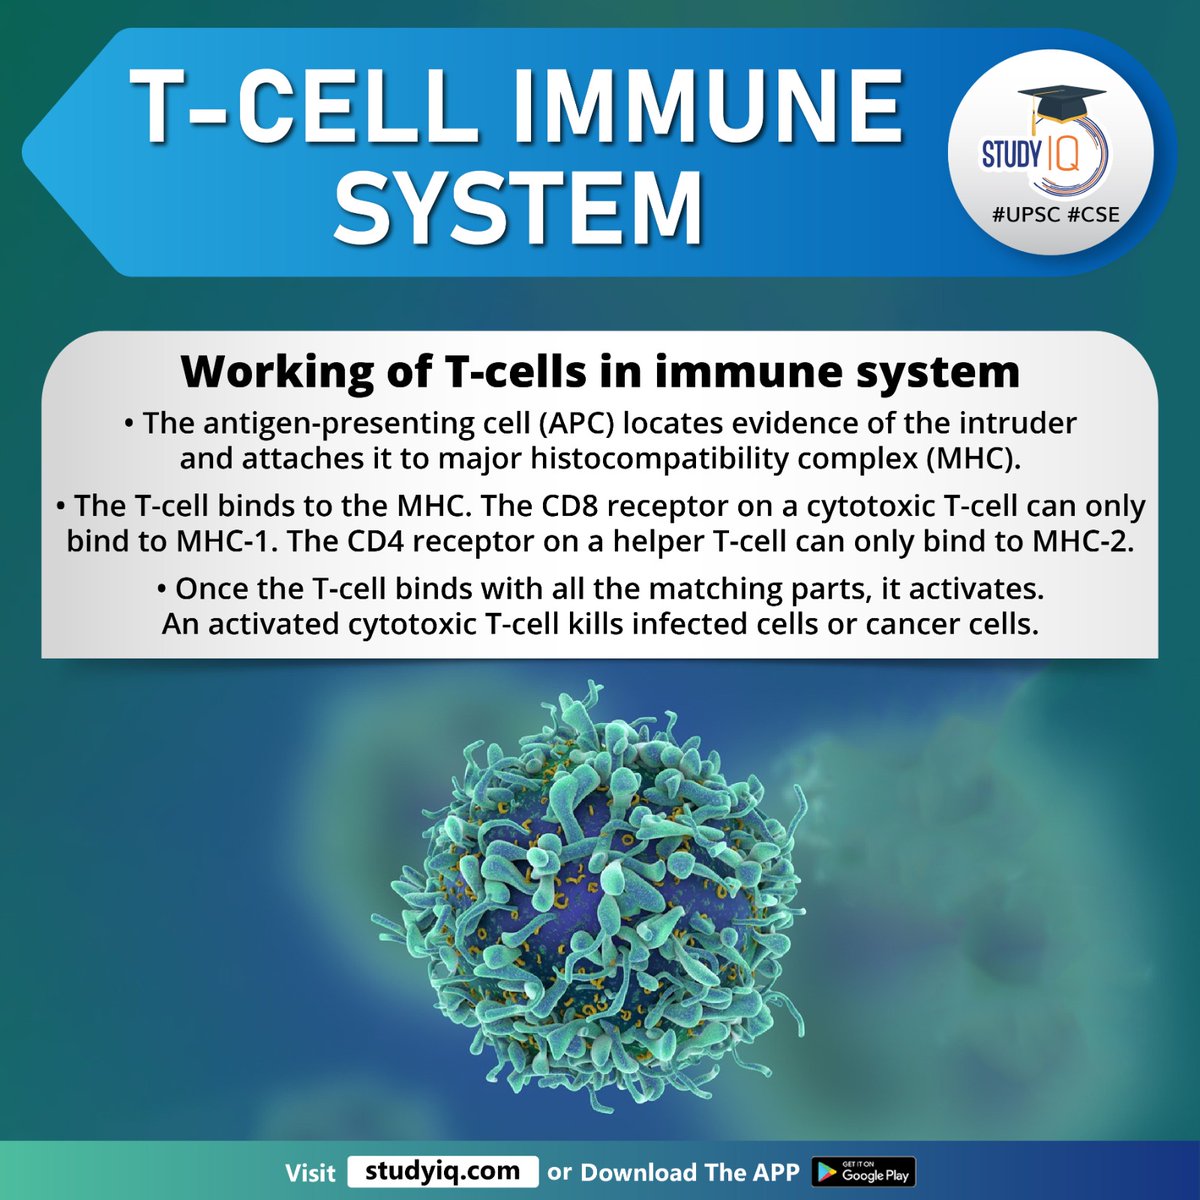 T-Cell Immune System

#tcellimmunesystem #omicranvariant #sarscov2 #tcellimmunity #typeofleukoycte #bloodcell #immunesystem #bonemarrow #immuneresponse #tcell #antigenpresentingcell #apc #mhc #cdb #cd4 #cytotoxic #cancercells #upsc #cse #ips #ias